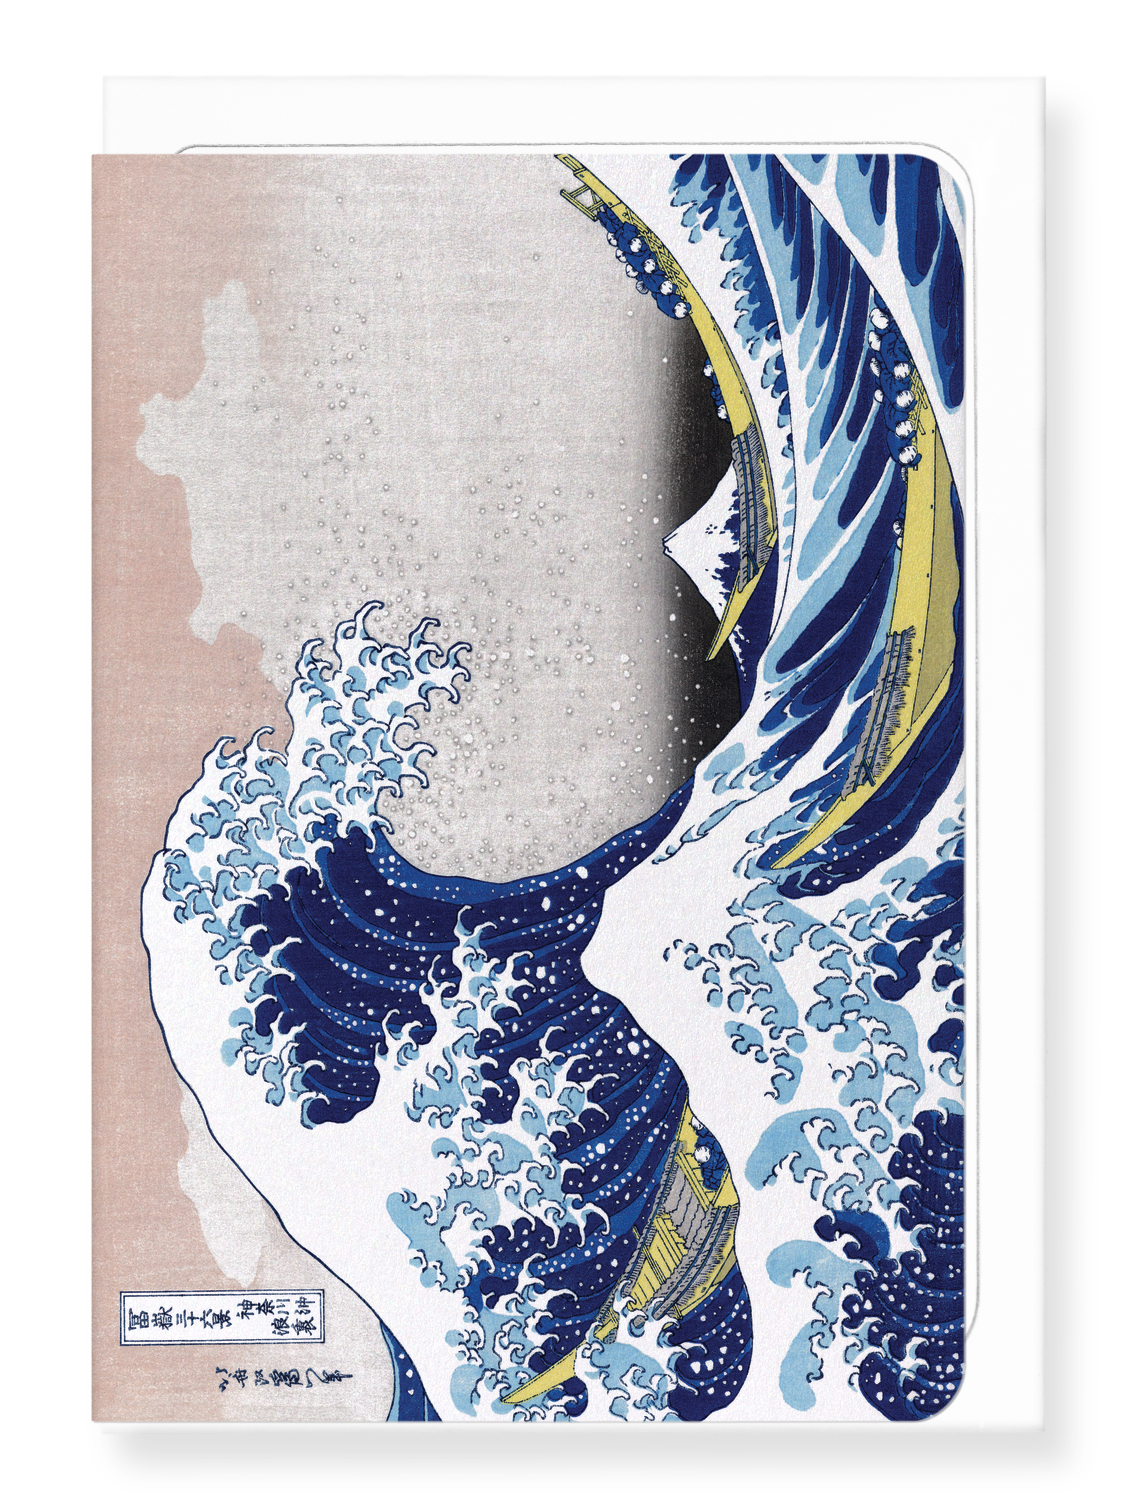 Ezen Designs - Great wave off Kanagawa (1831) - Greeting Card - Front